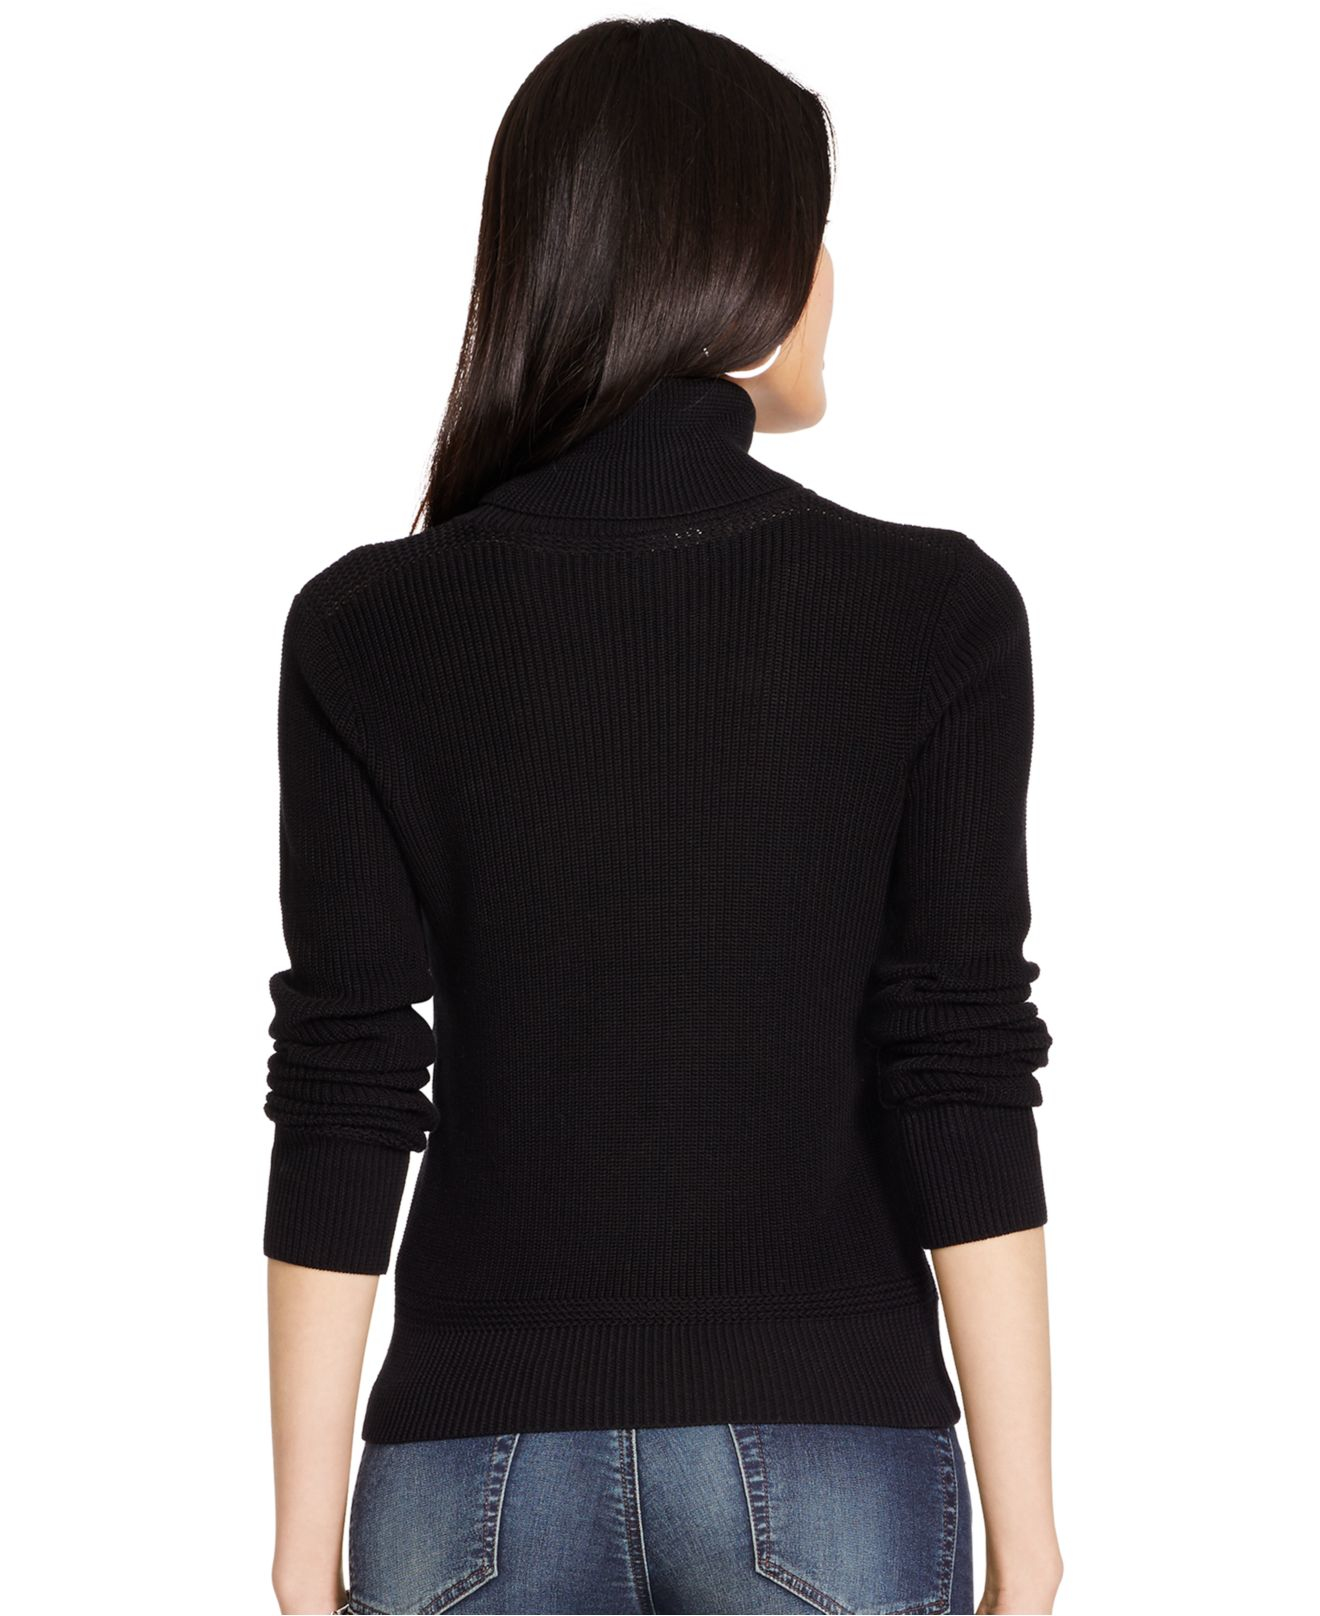 Lyst - Polo Ralph Lauren Cotton Turtleneck Sweater in Black